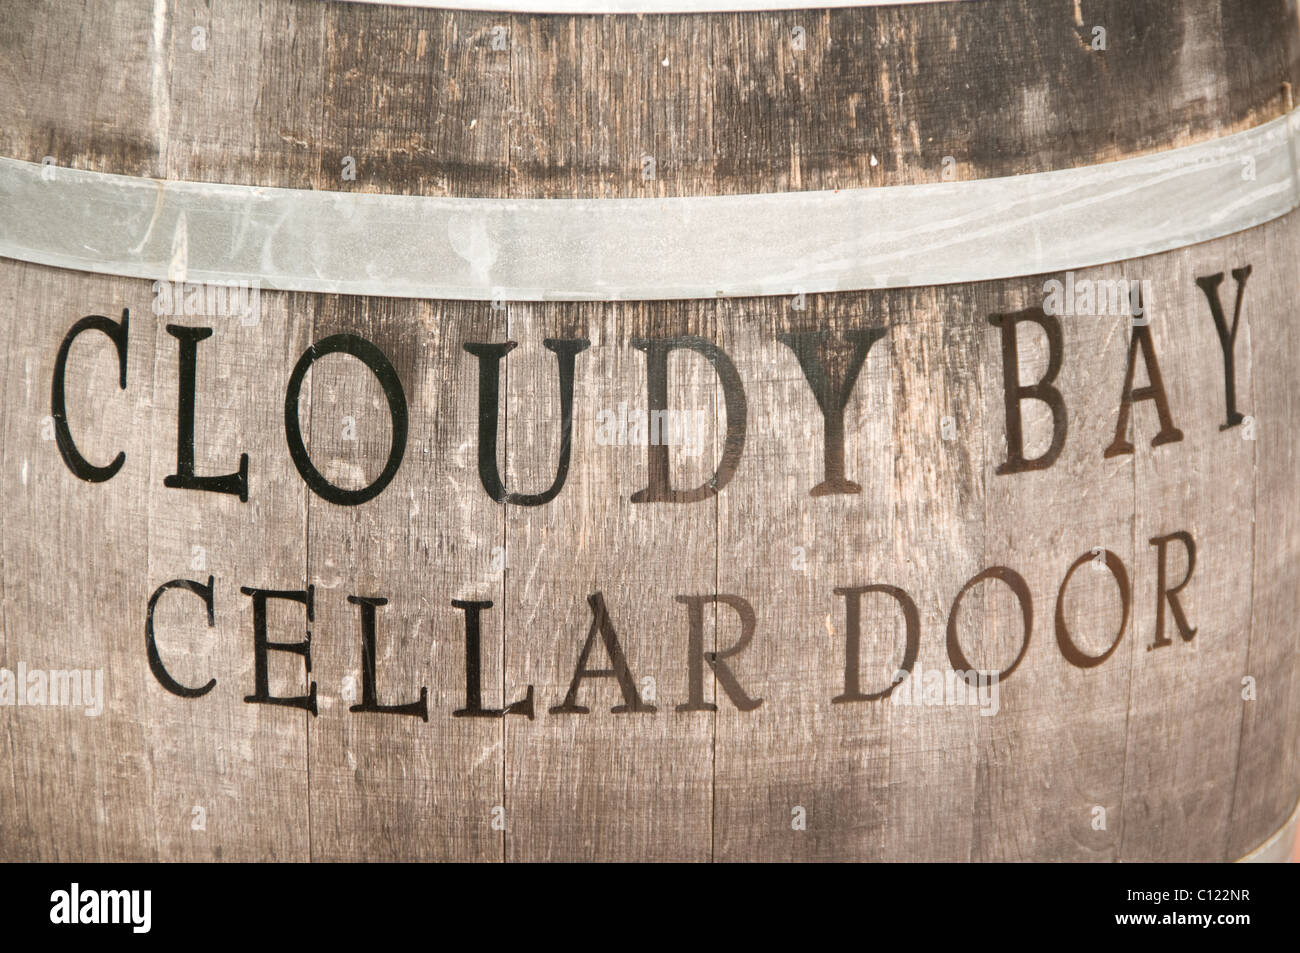 Cloudy Bay sign / barrel, New Zealand Stock Photo - Alamy